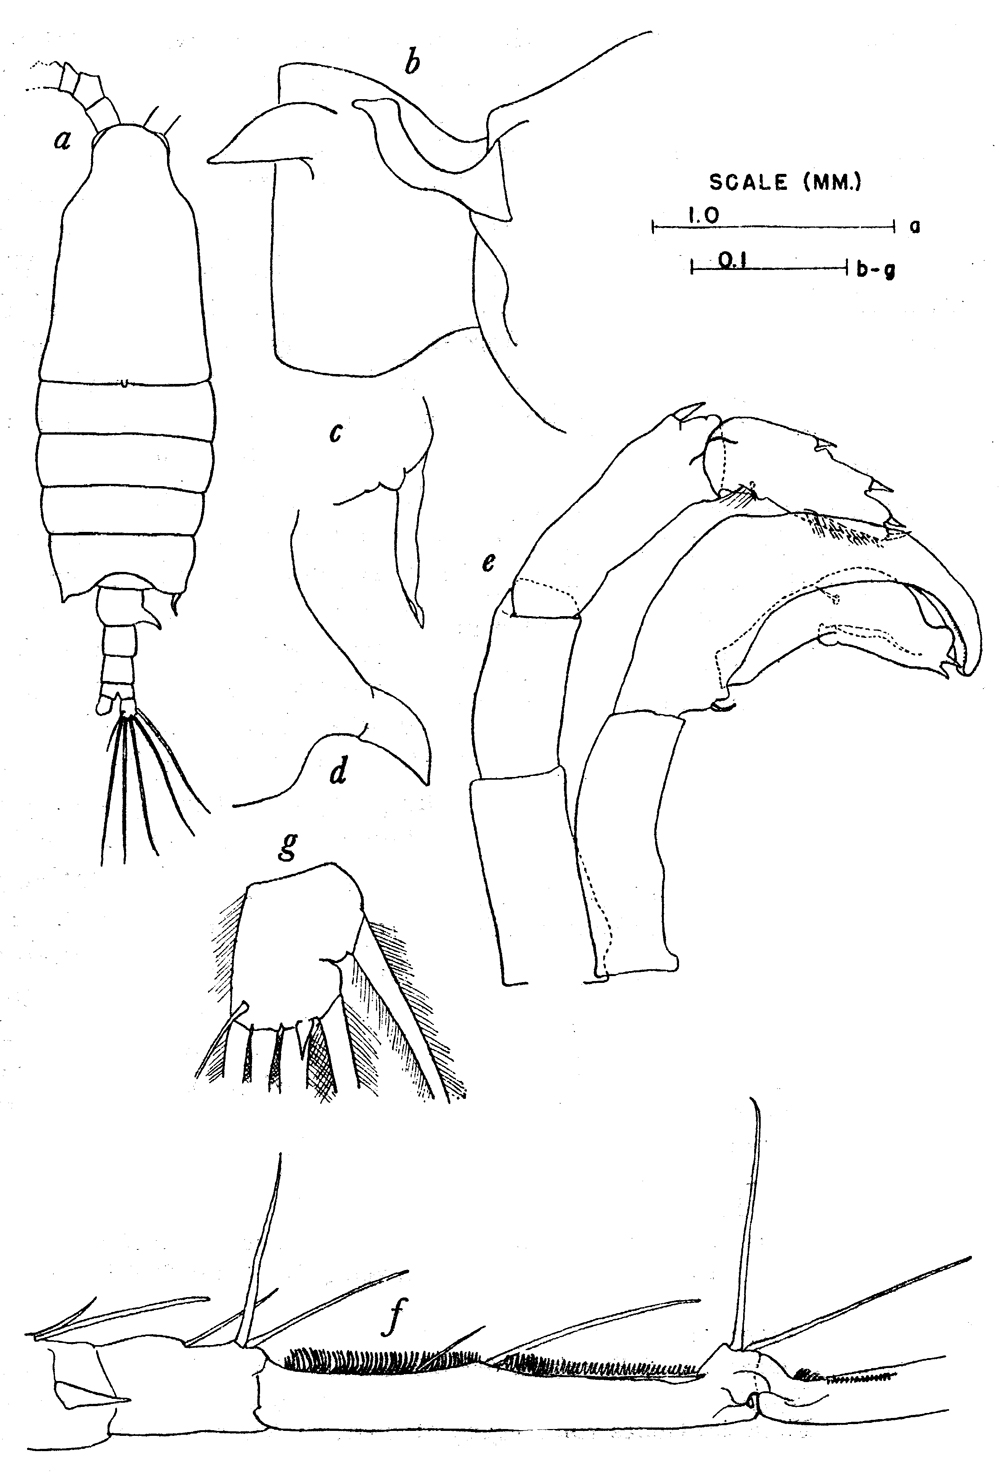 Species Candacia paenelongimana - Plate 2 of morphological figures